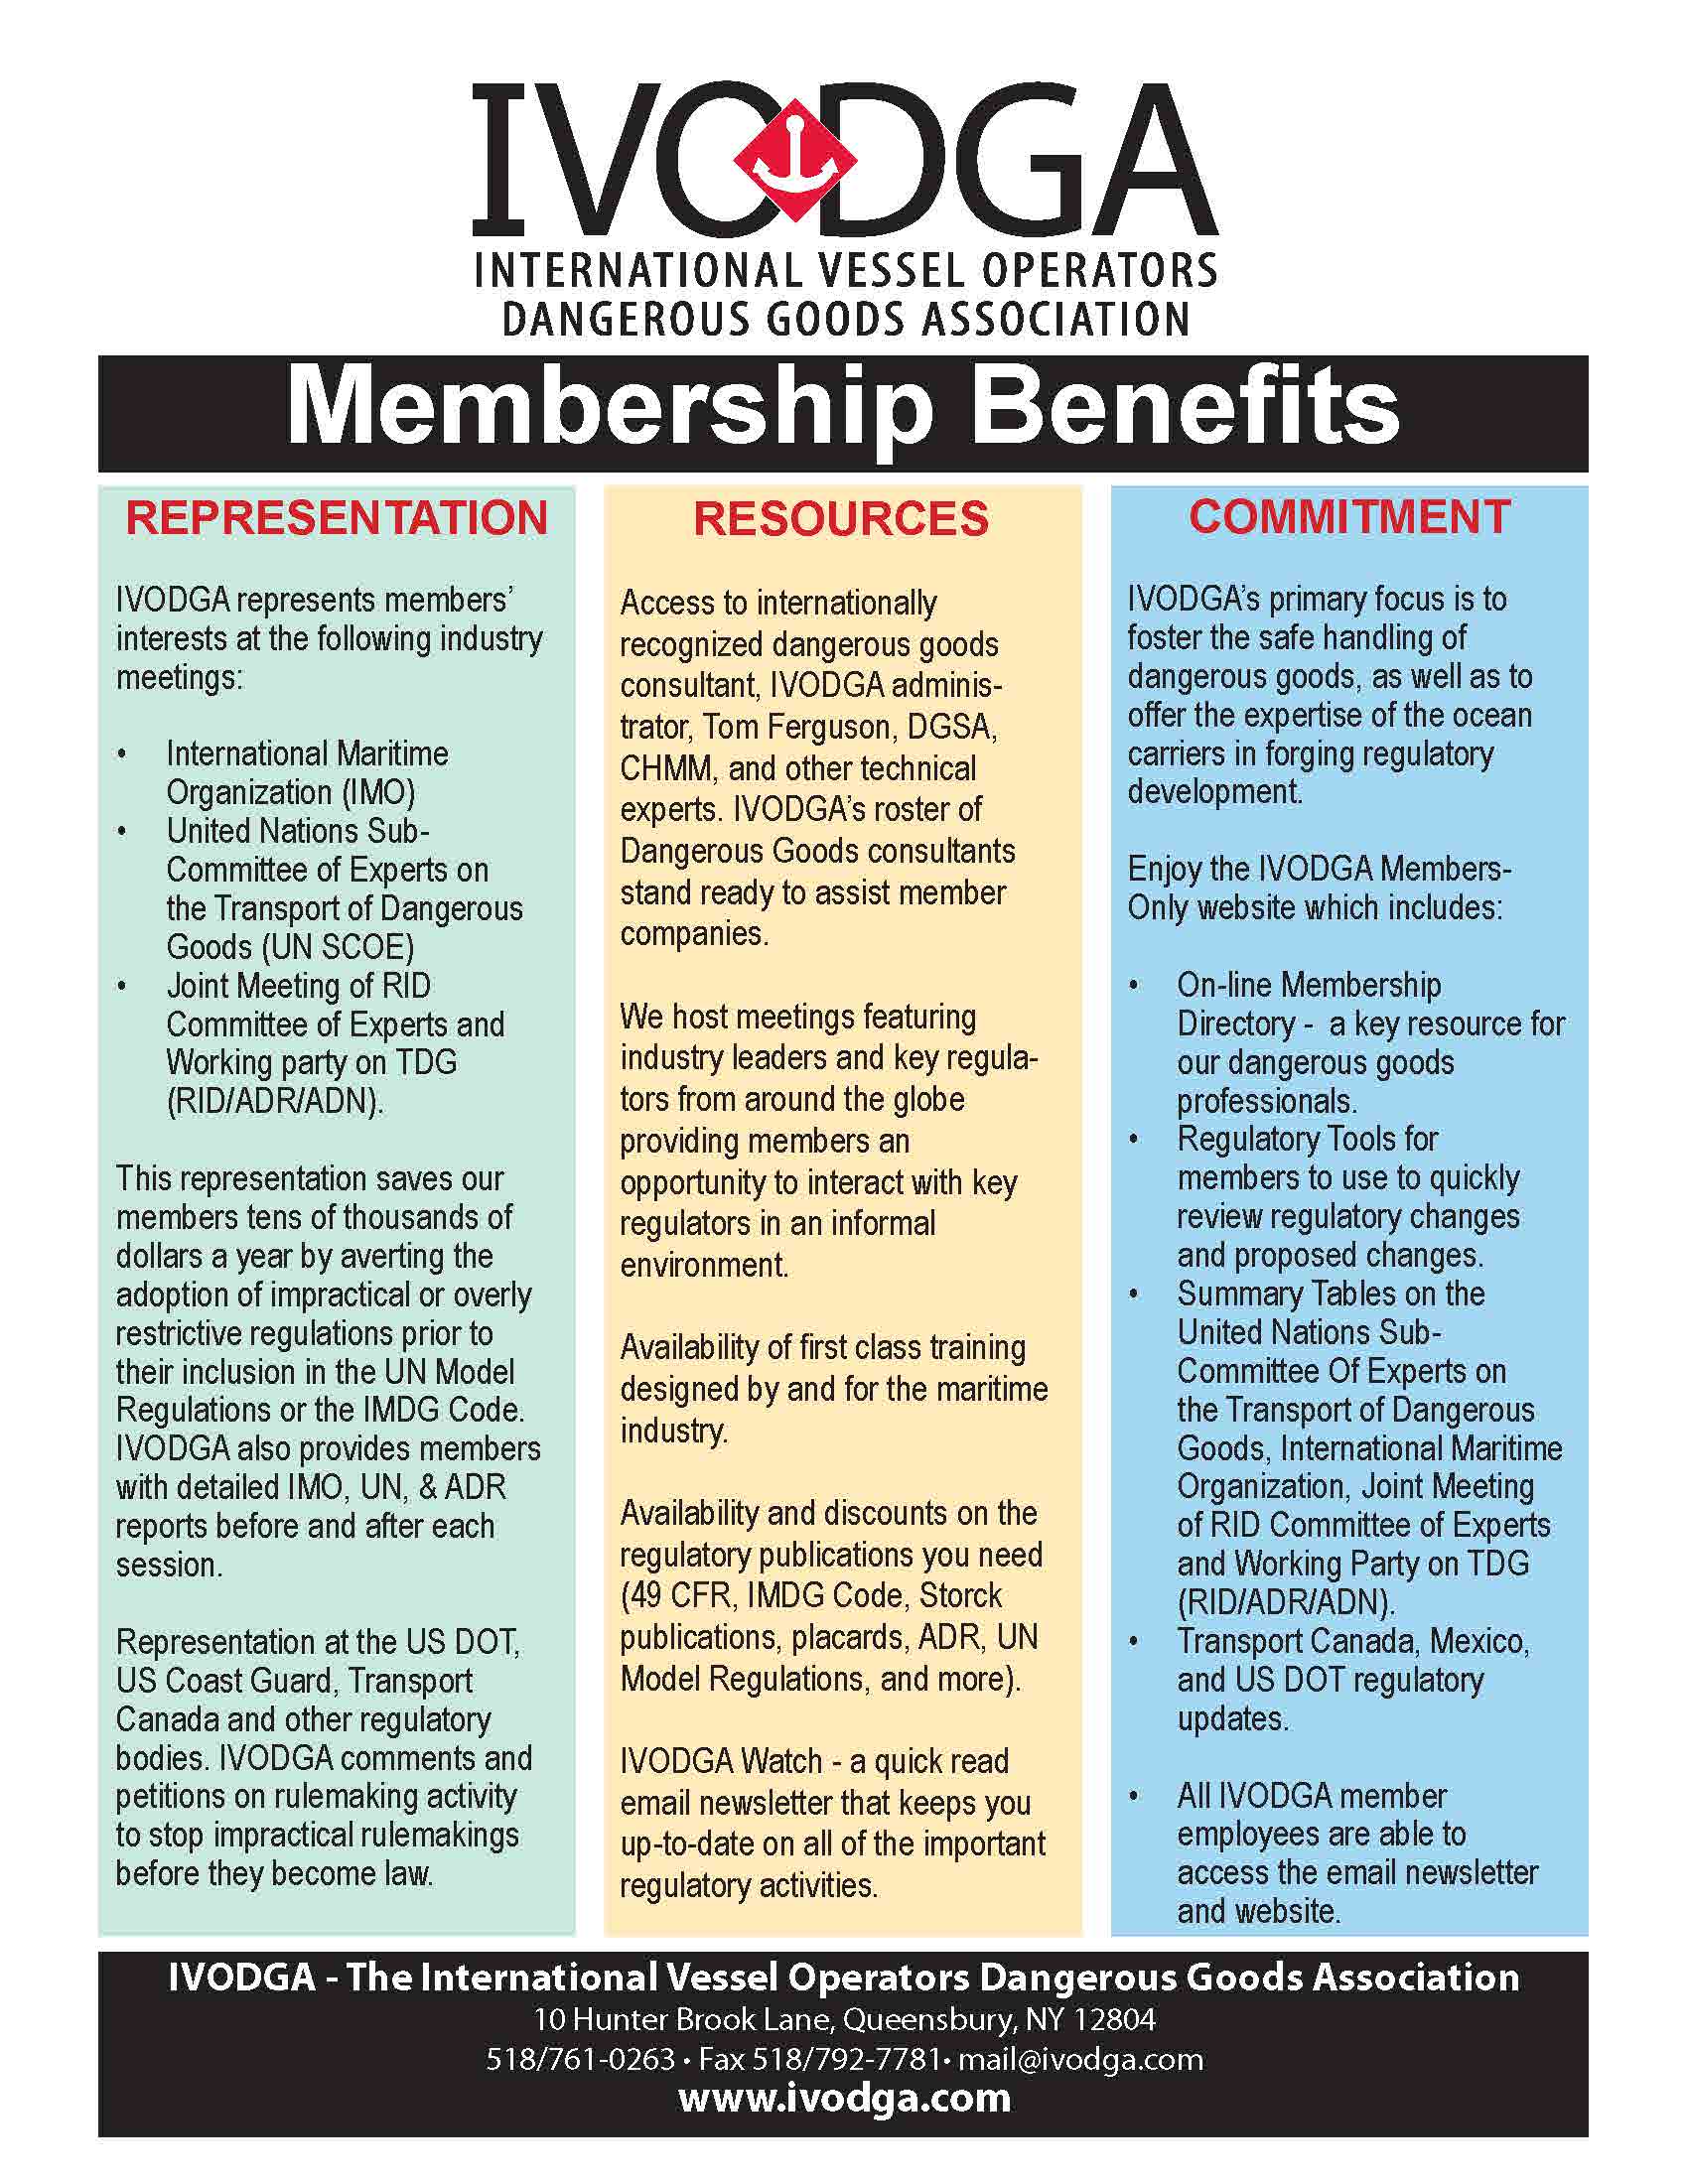 IVODGA Member Benefits